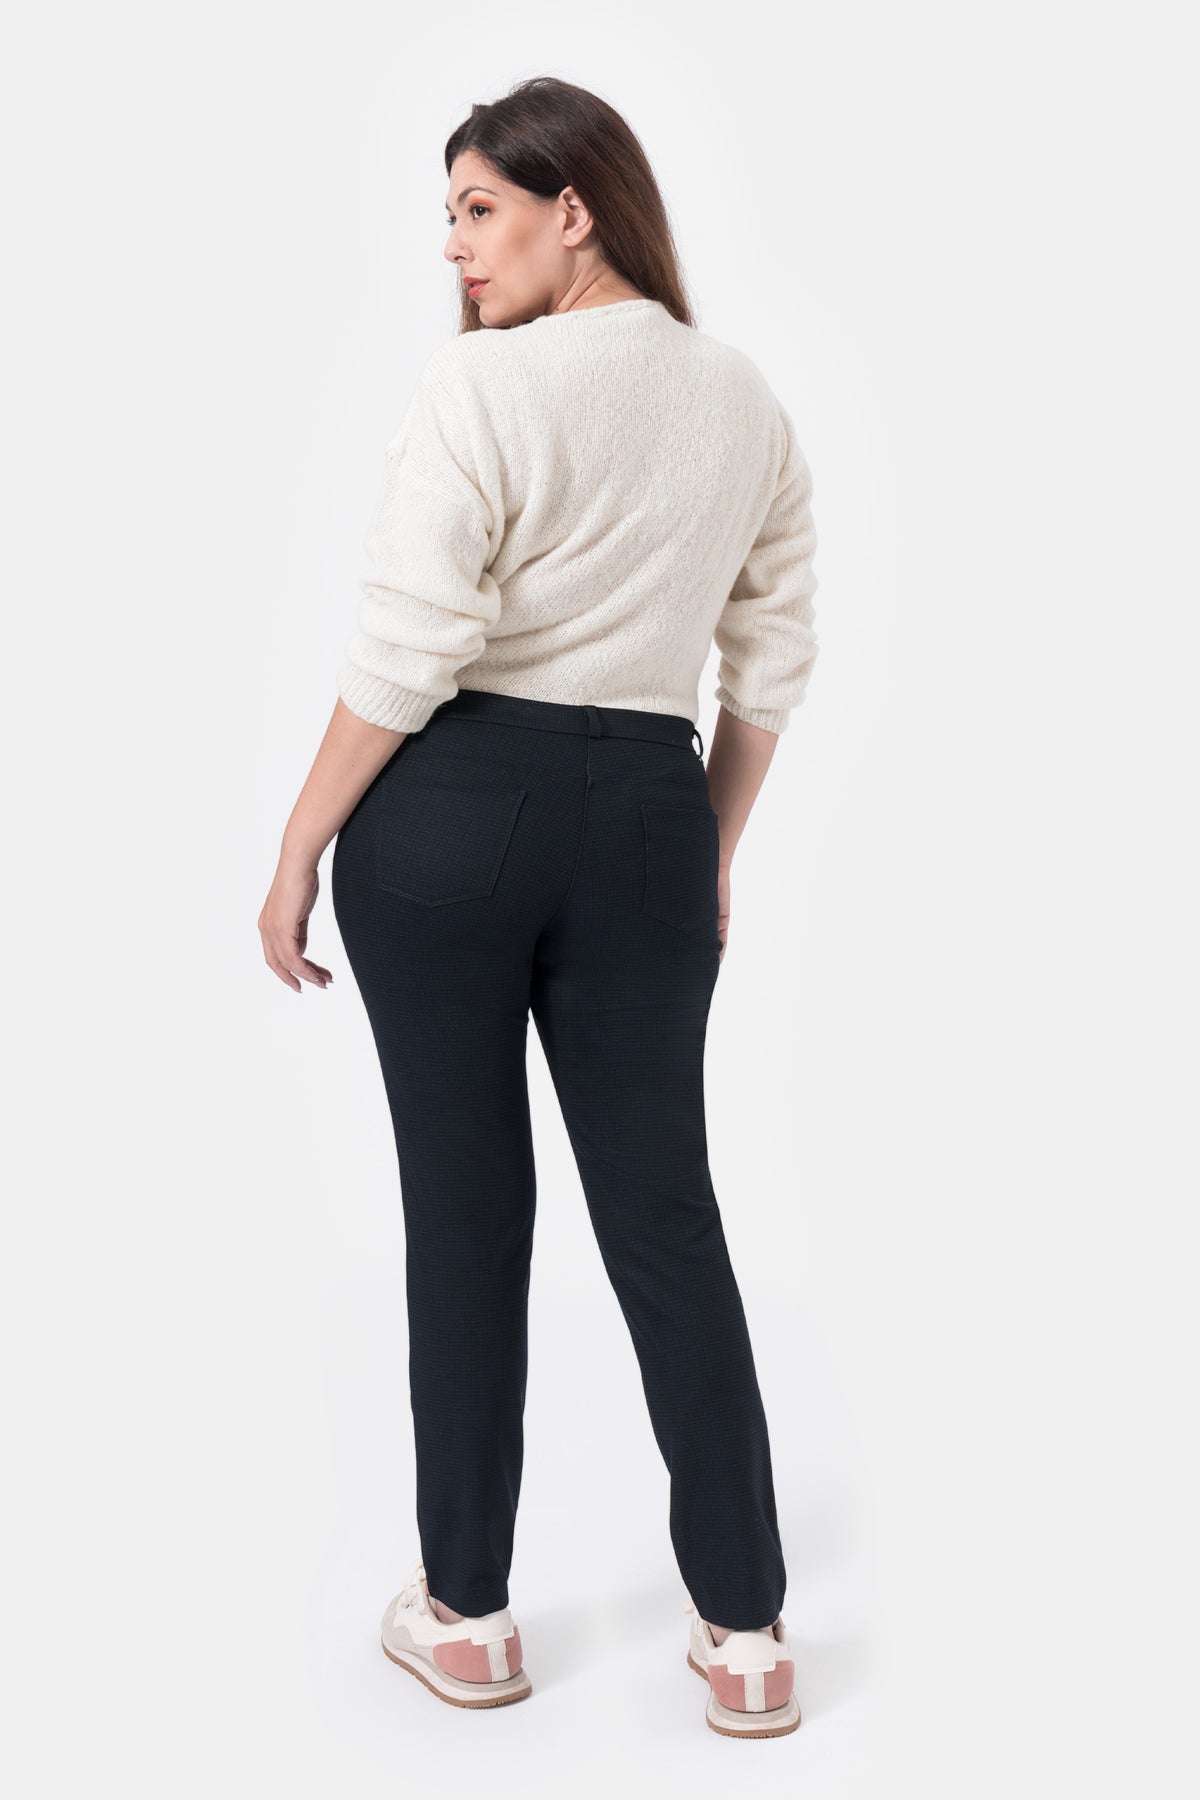 Anya PMS51 Pantalone in maglia jacquard